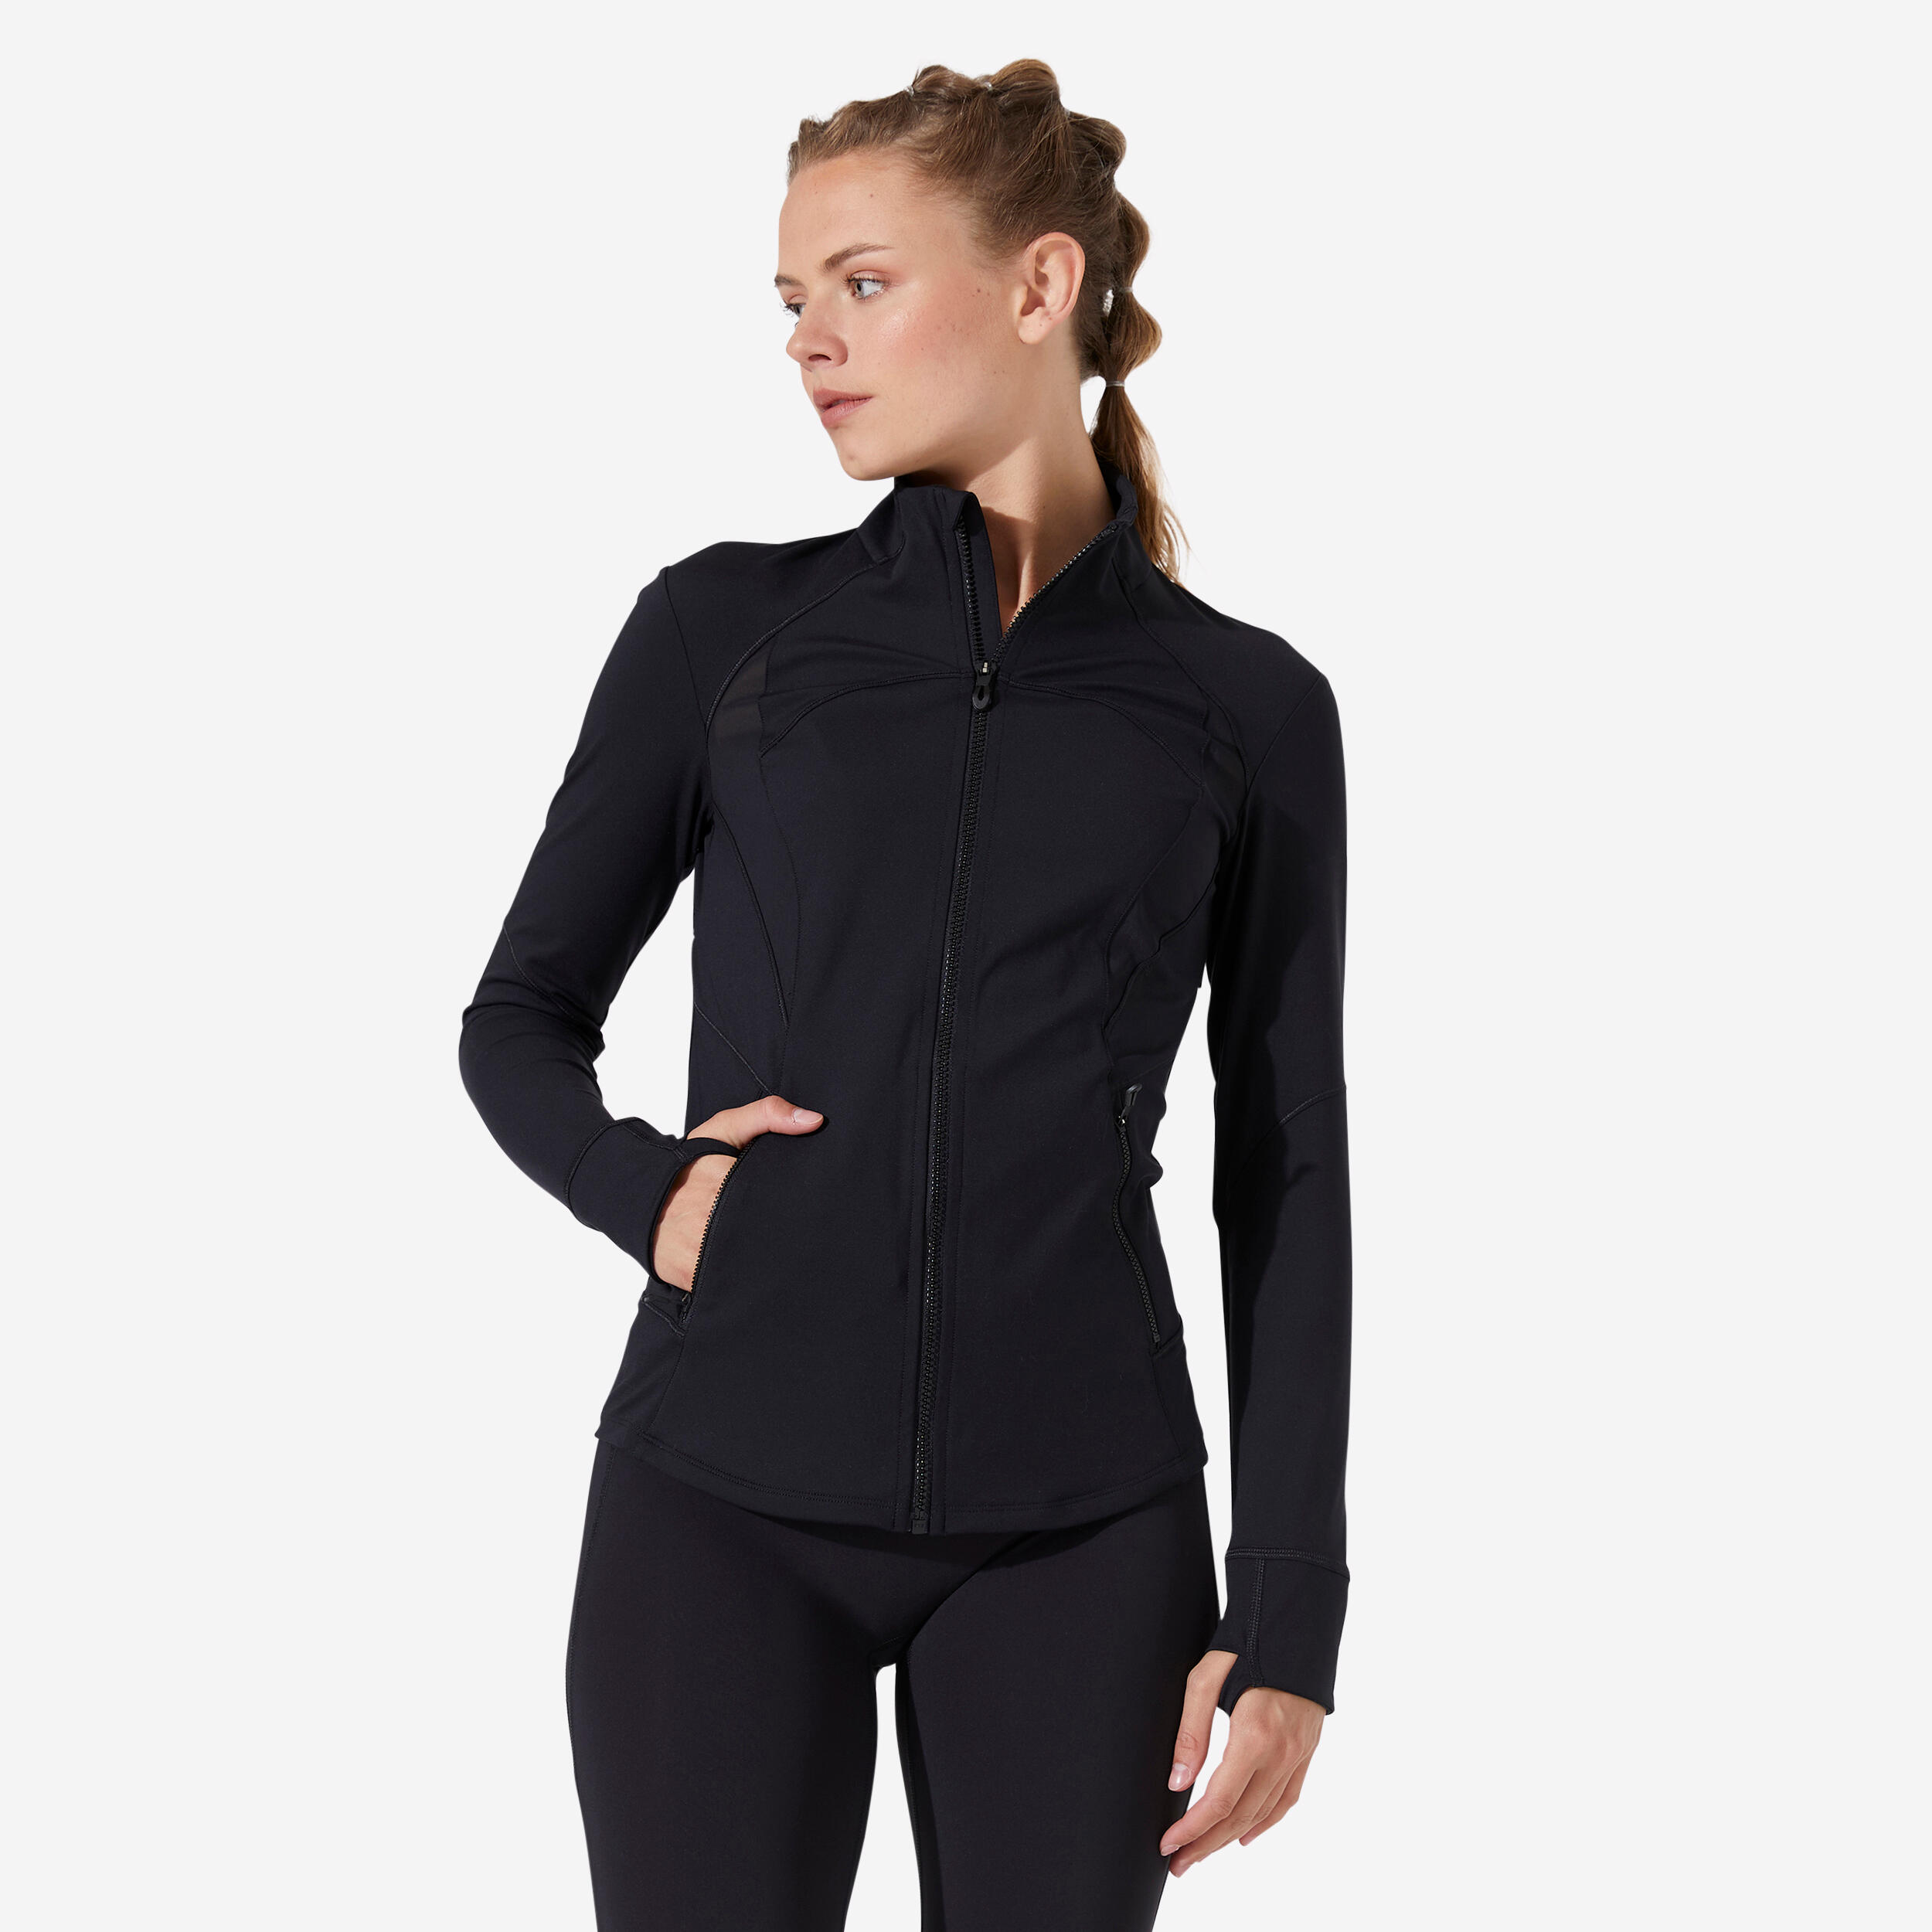 Image of Women’s Fitness Jacket - FJA 900 Black